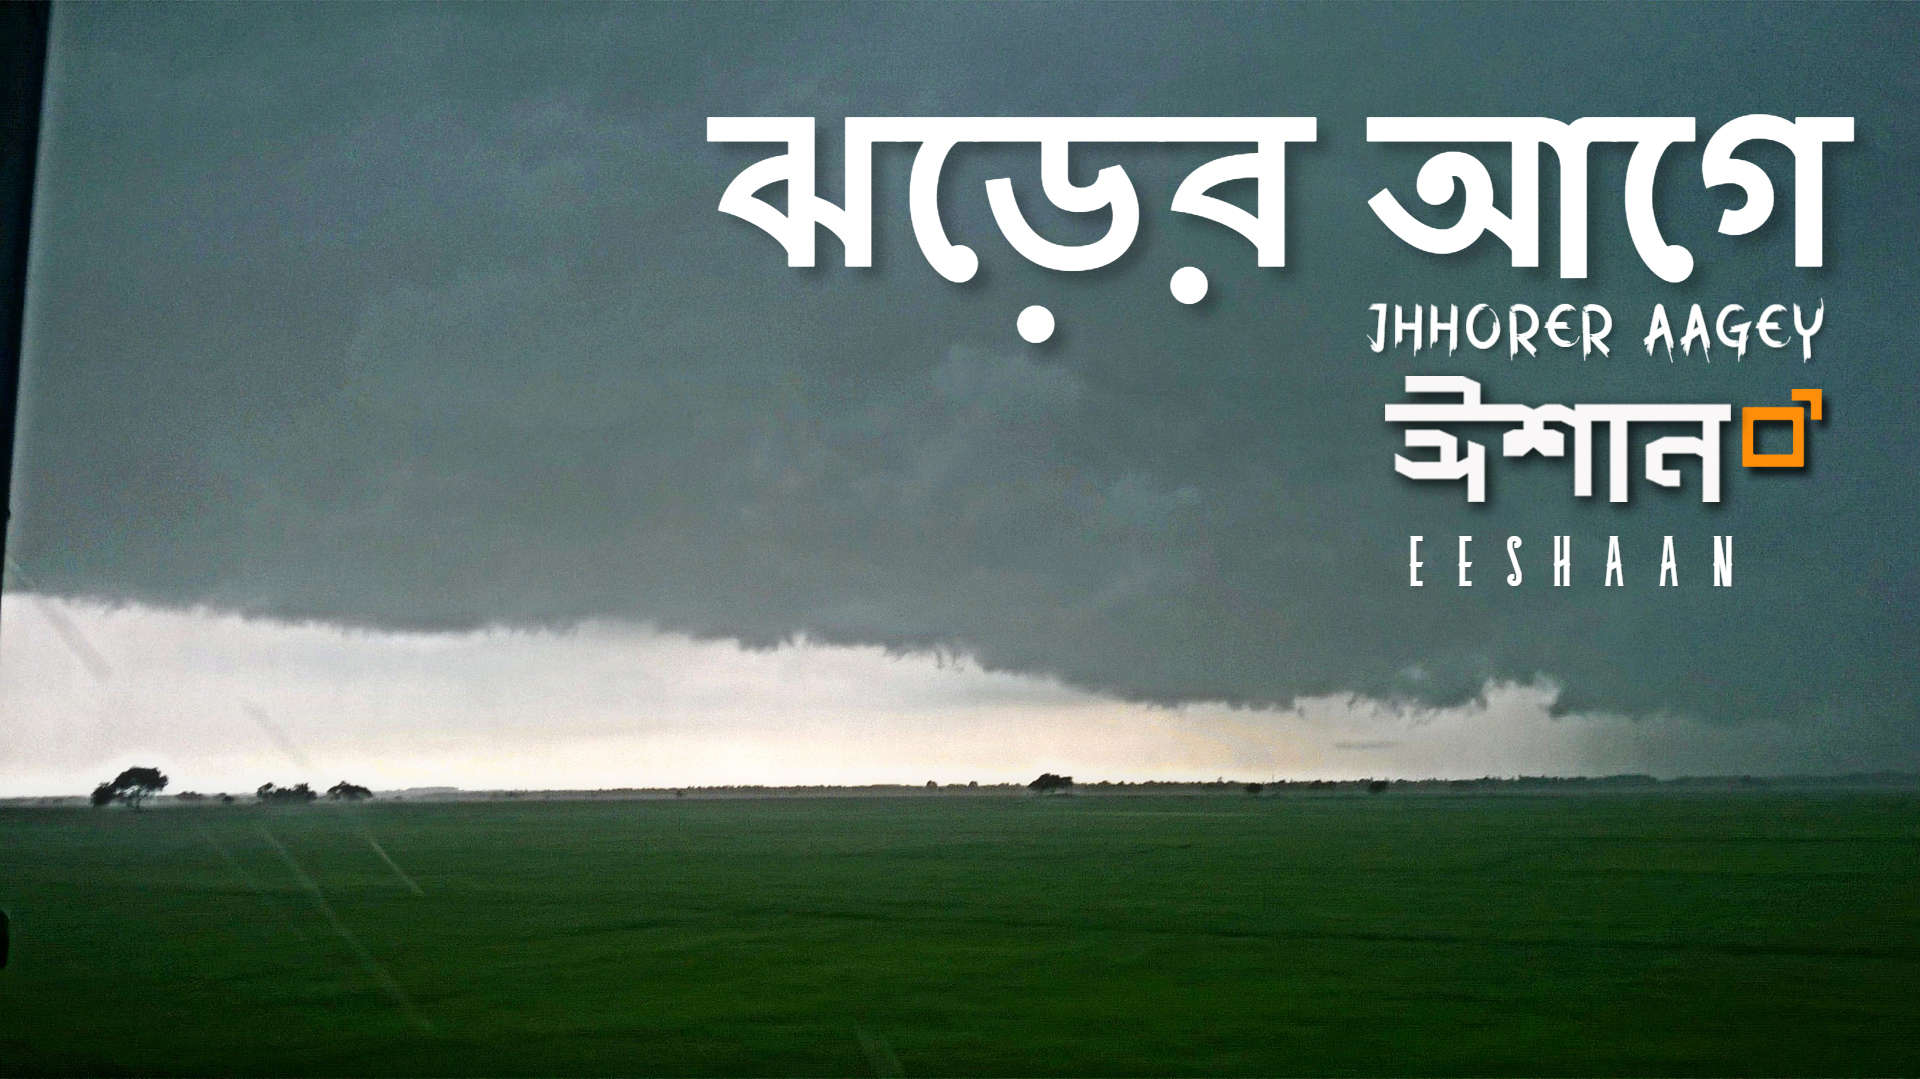 Bangla Band Eeshaan Release Their Latest Song Jhhorer Aagey